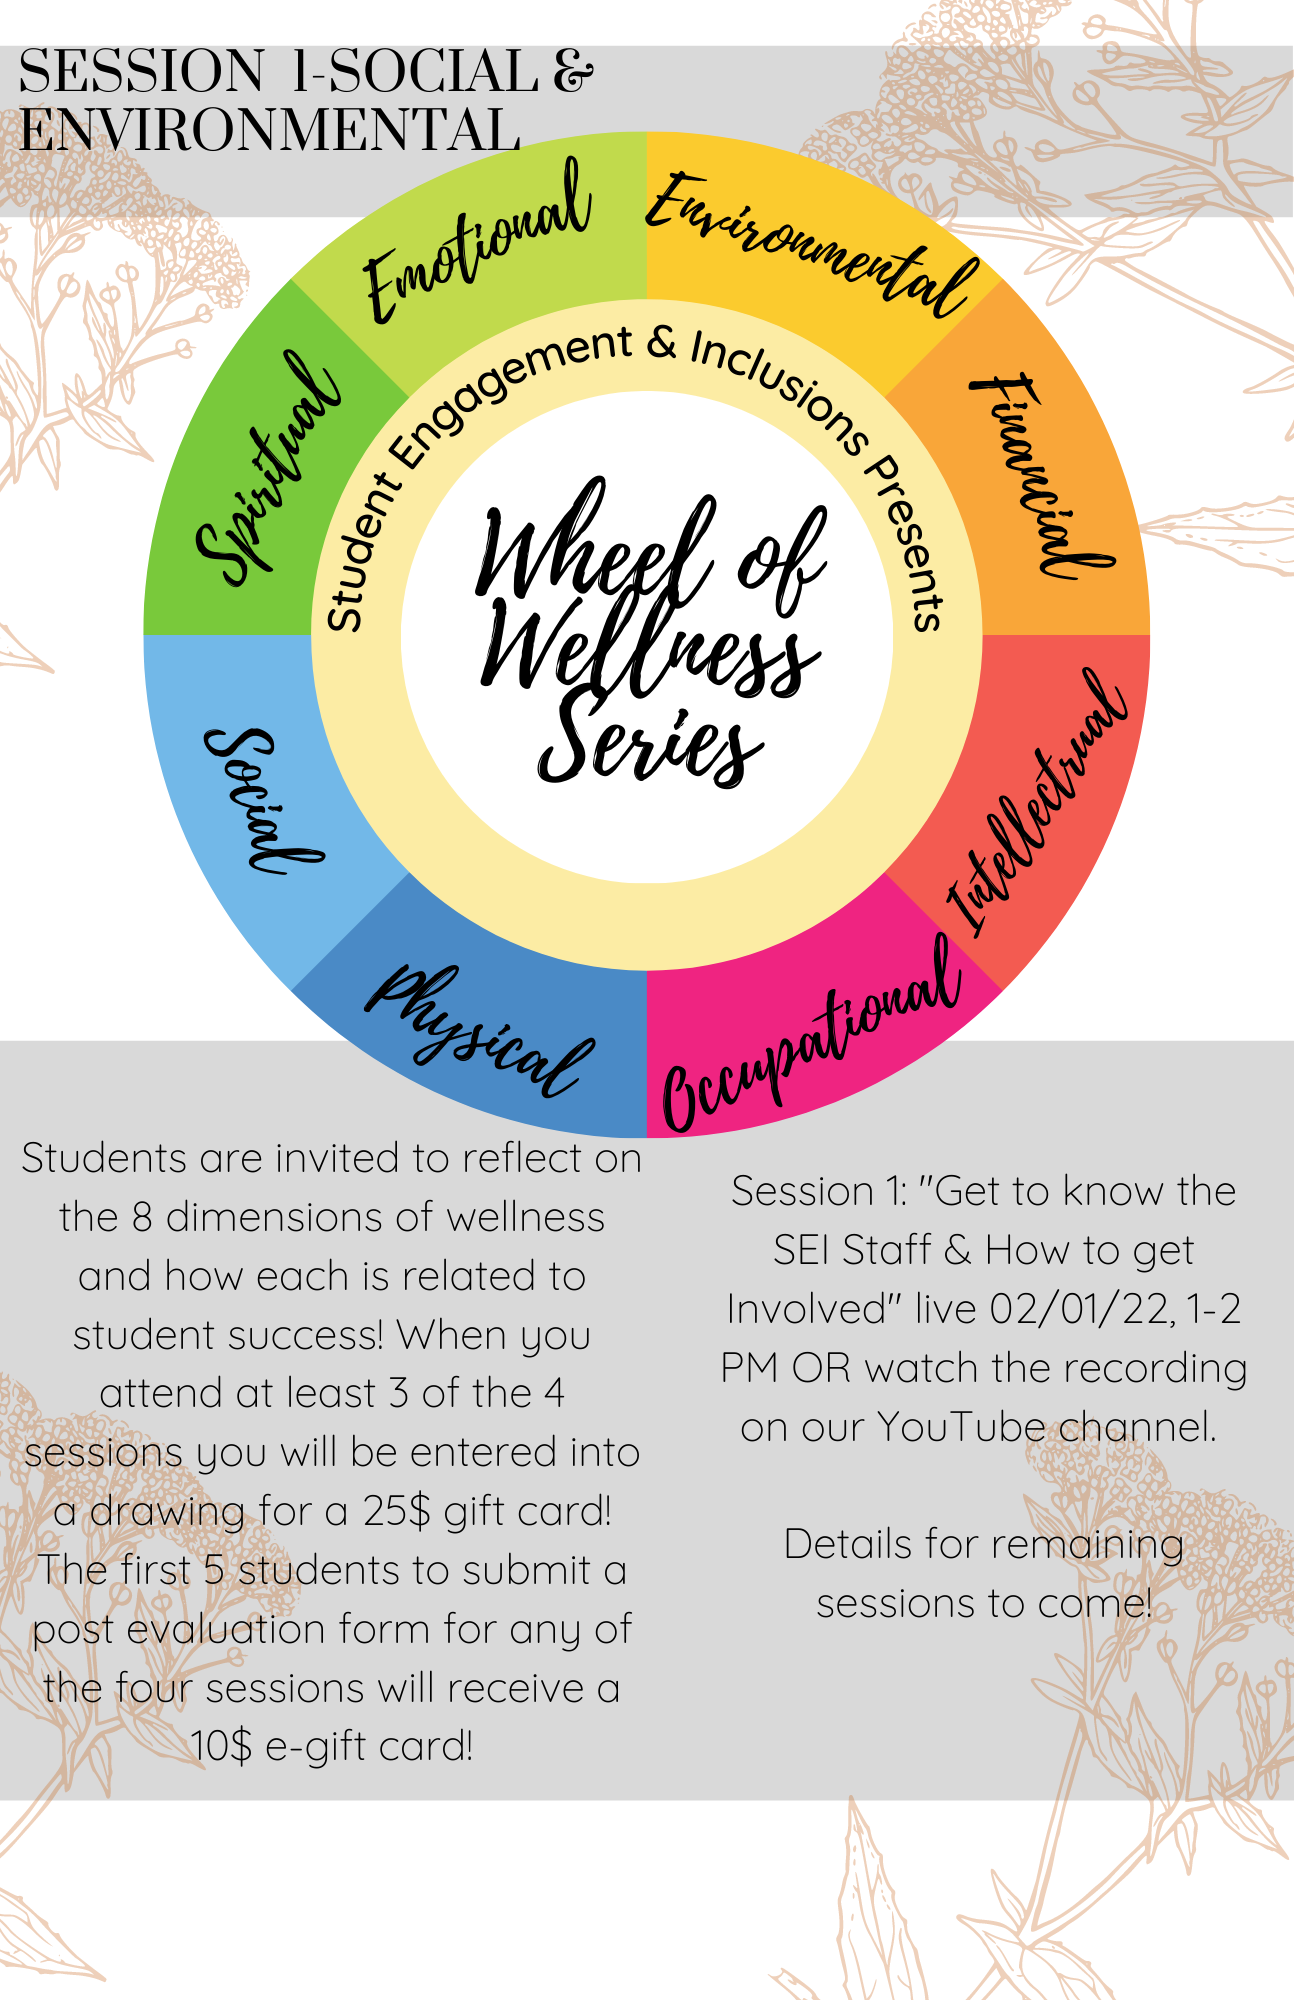 The Wheel of Wellness flyer.